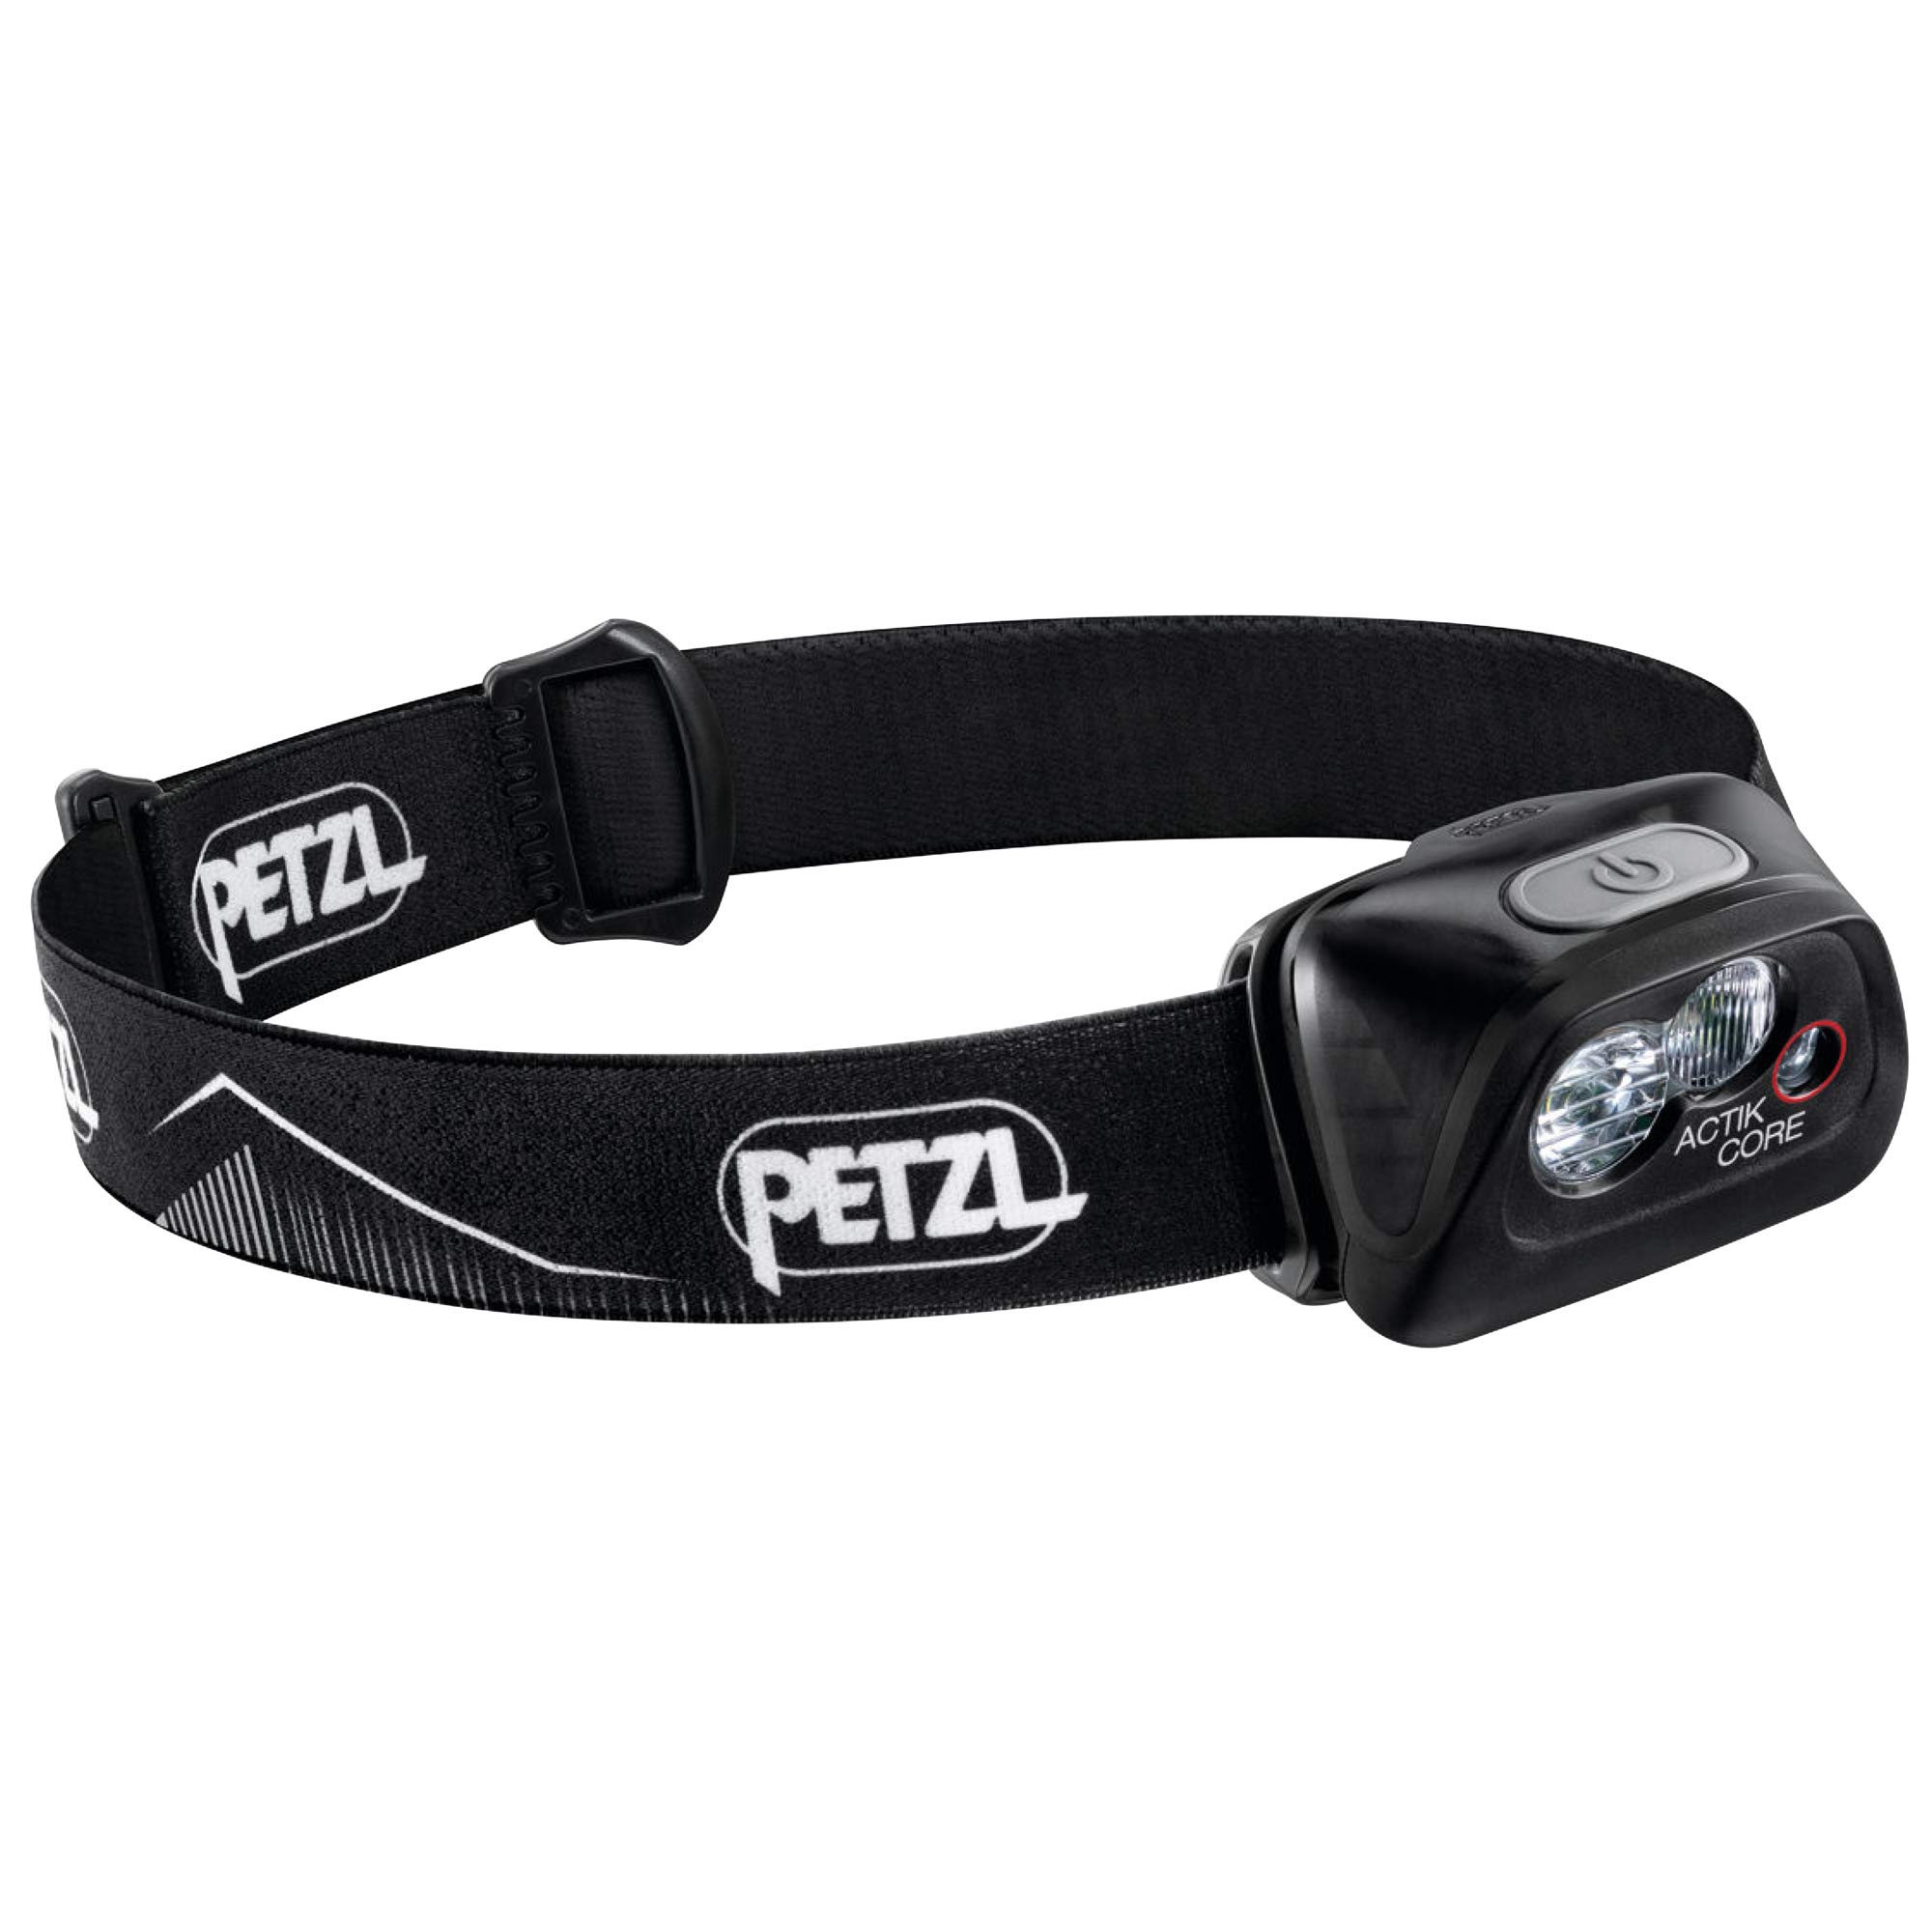 Petzl ACTIK CORE Headlamp - Powerful, Rechargeable 600 ...